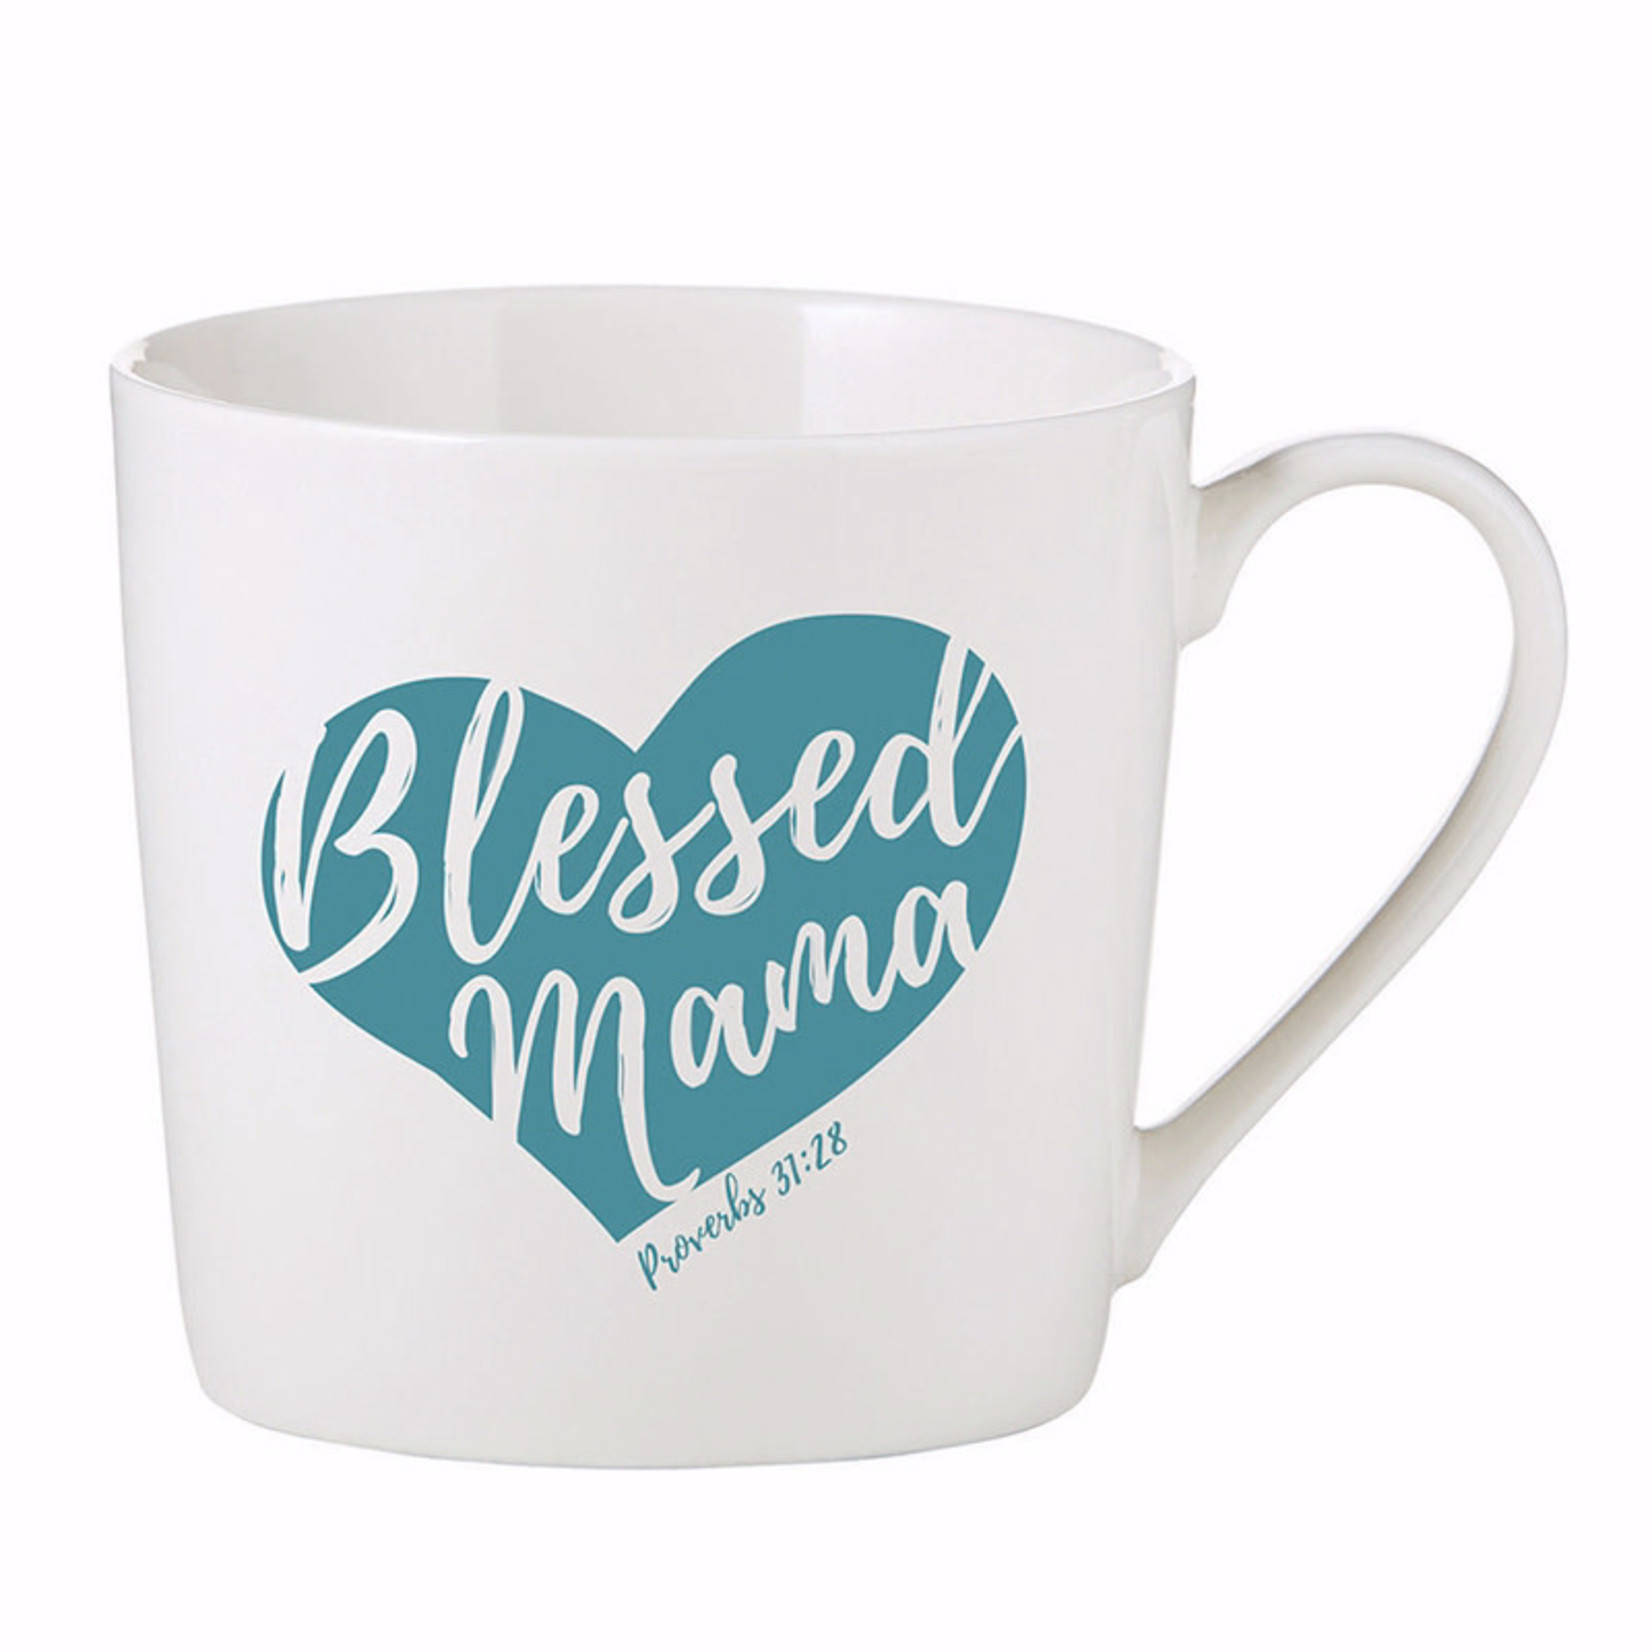 Blessed mama white mug